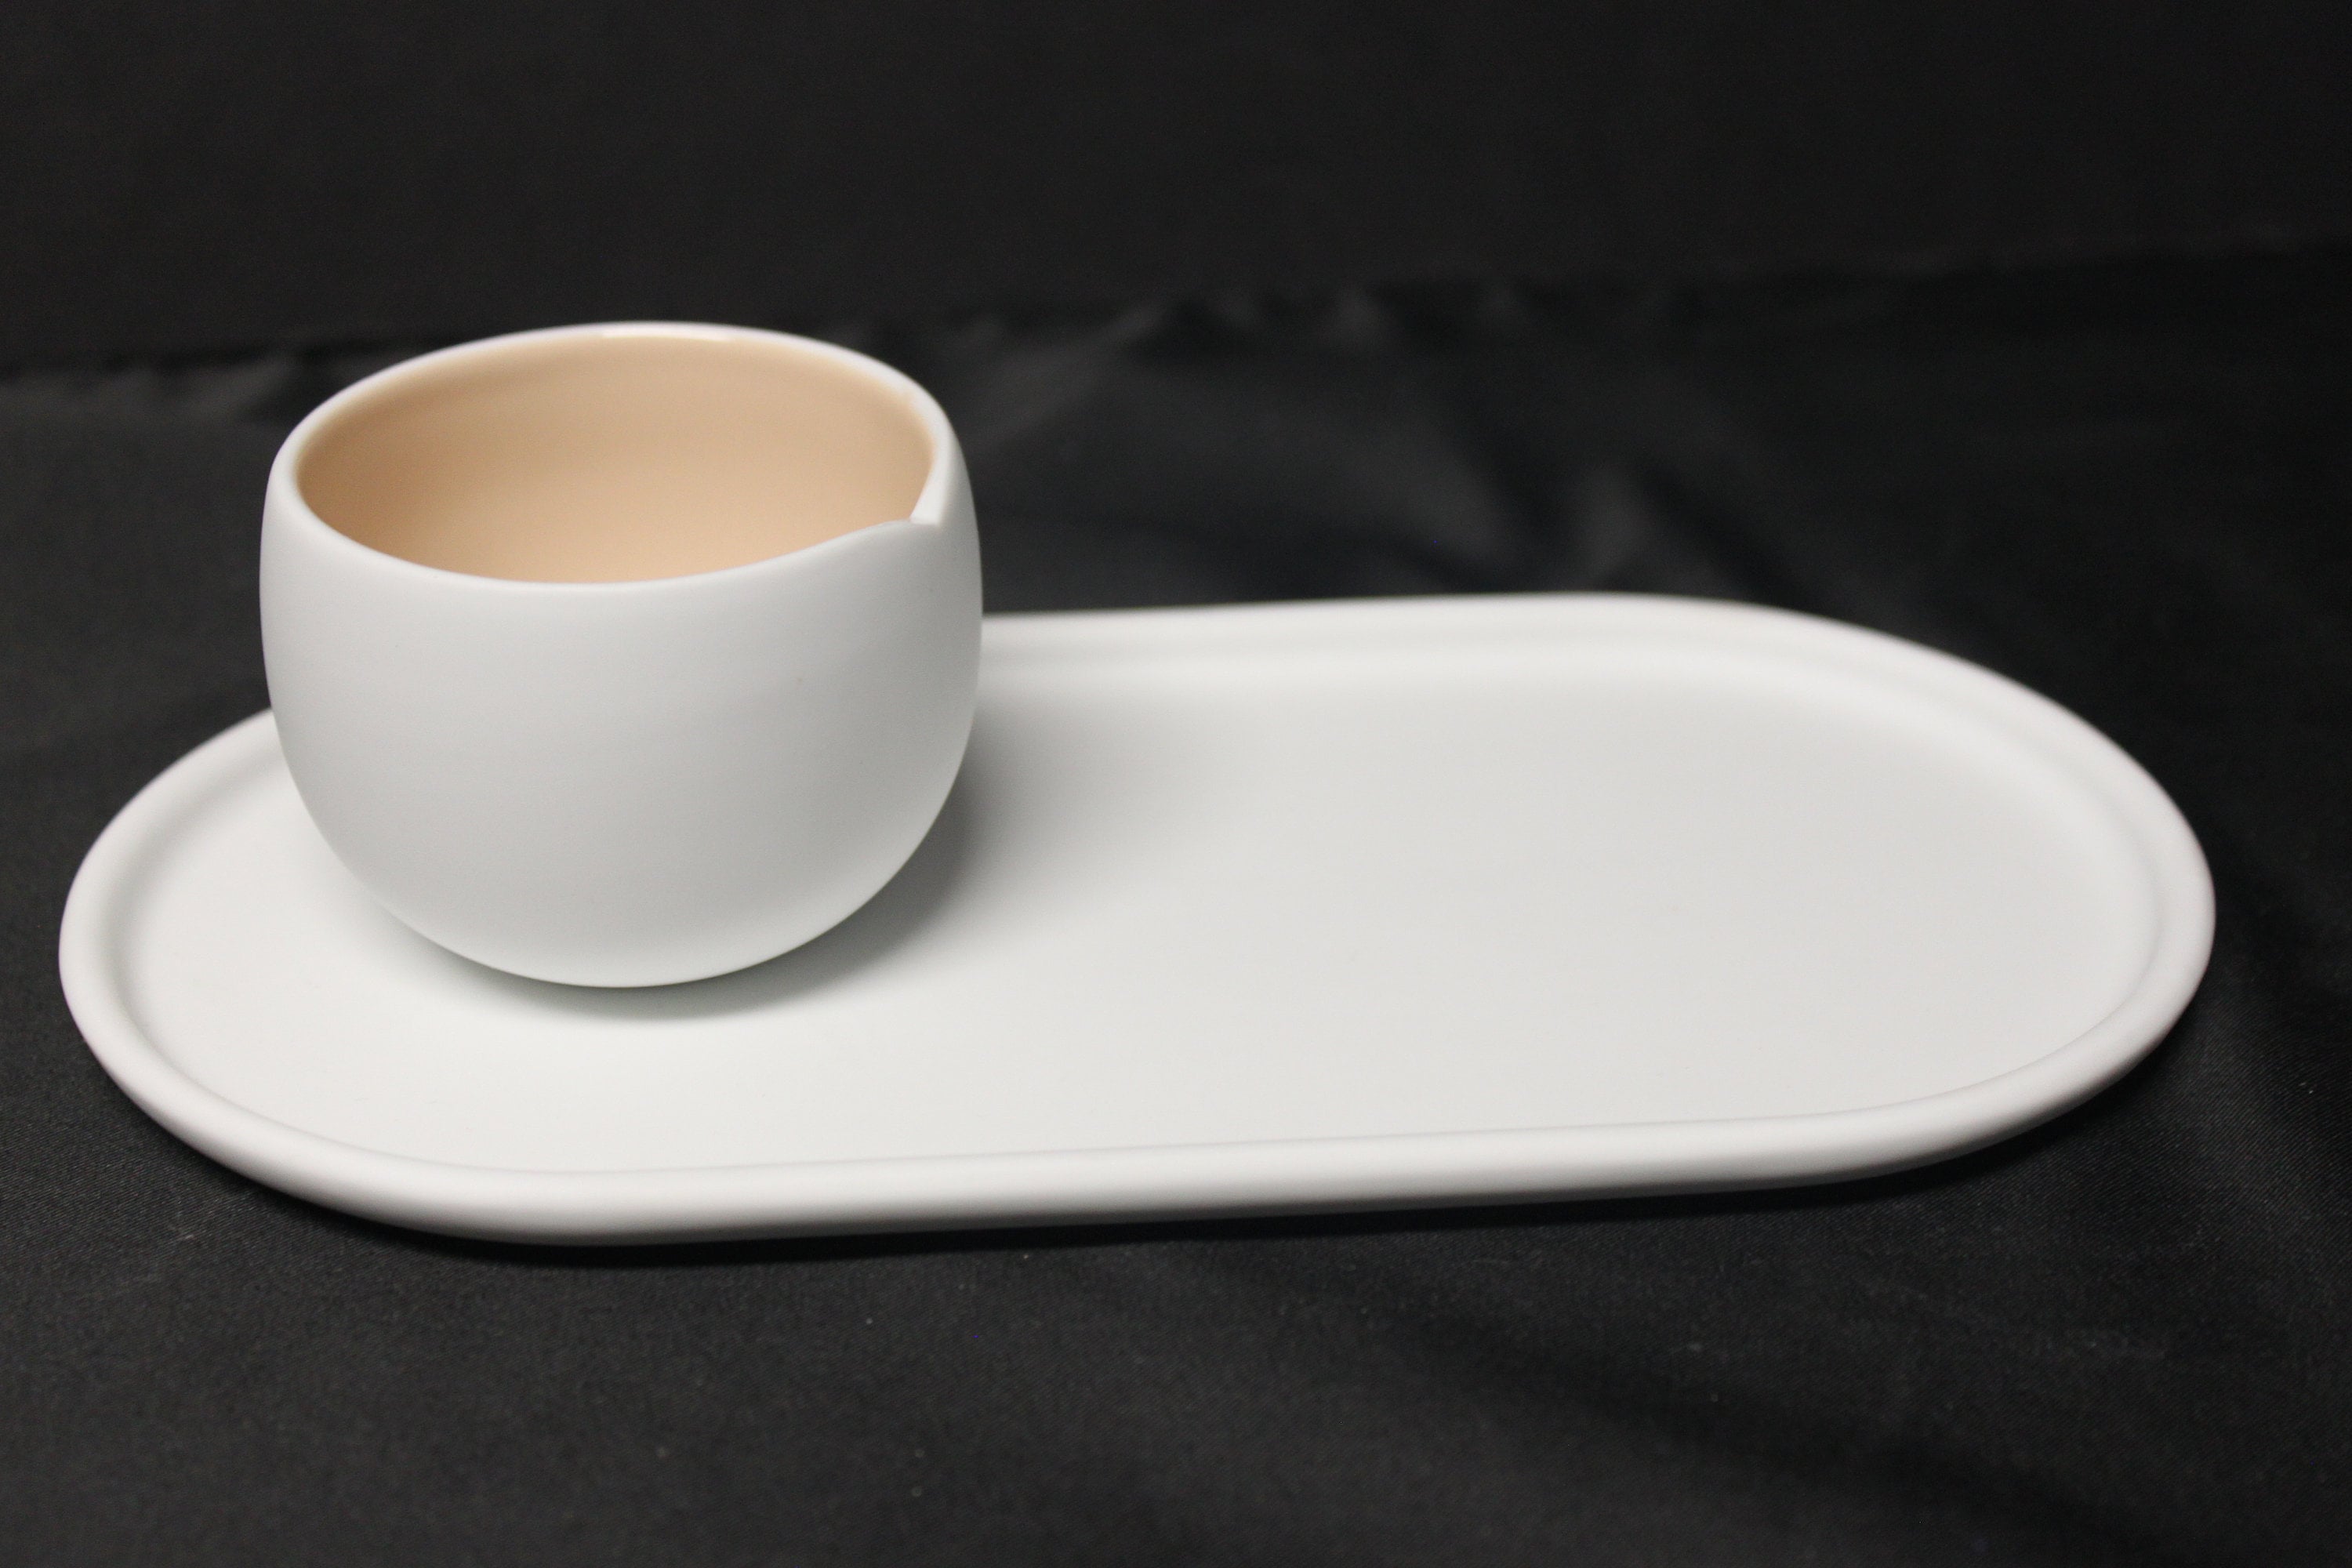 Nespresso Origin Collection - Set of 2 Coffee Mugs - New In Original  Packaging